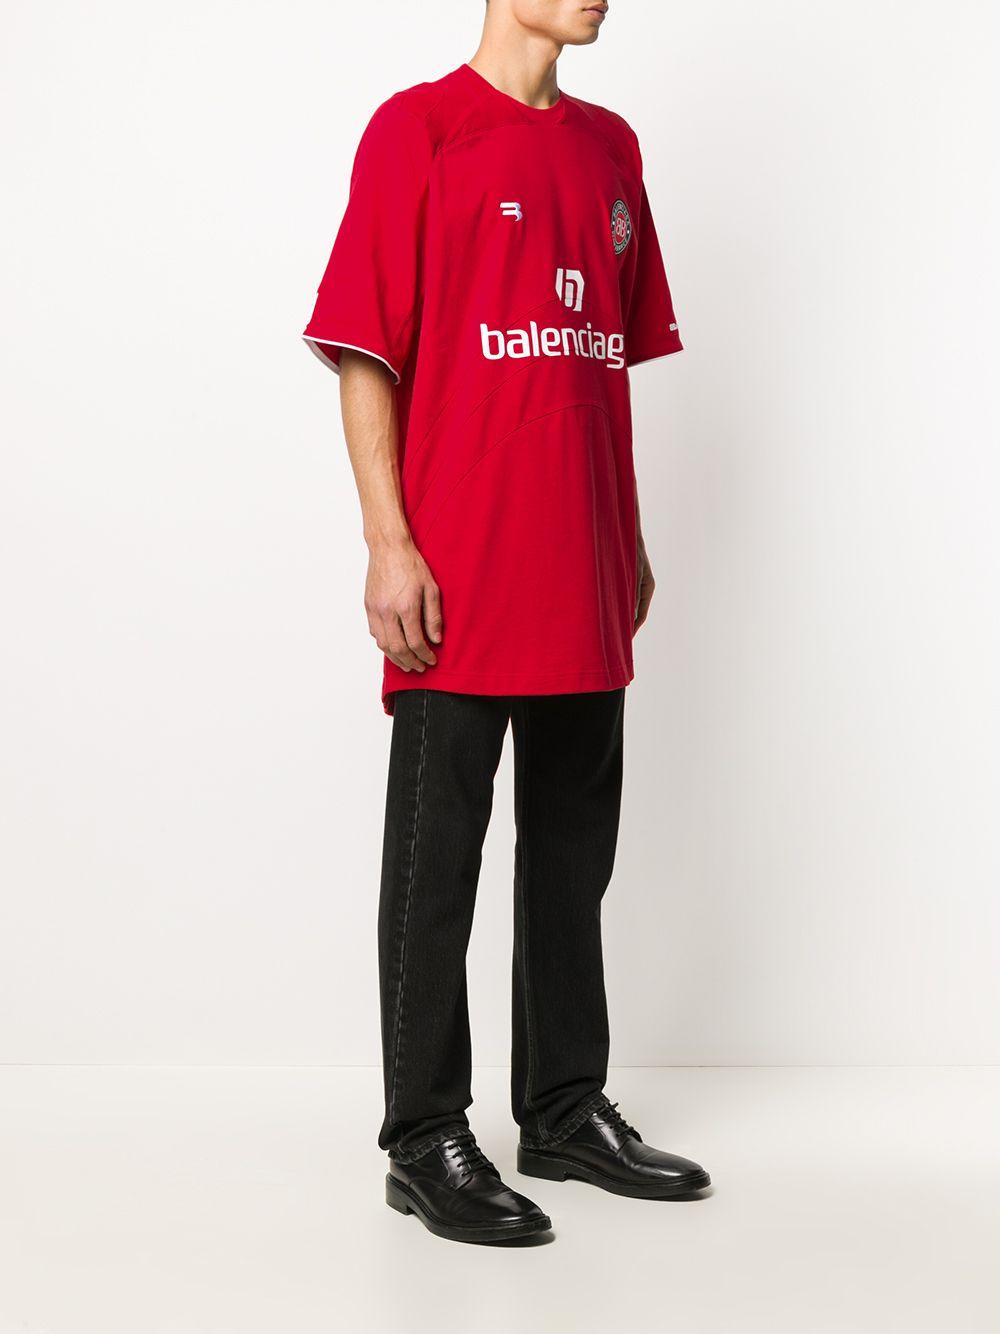 Balenciaga Cotton Logo-print Football T-shirt in Red for Men - Lyst